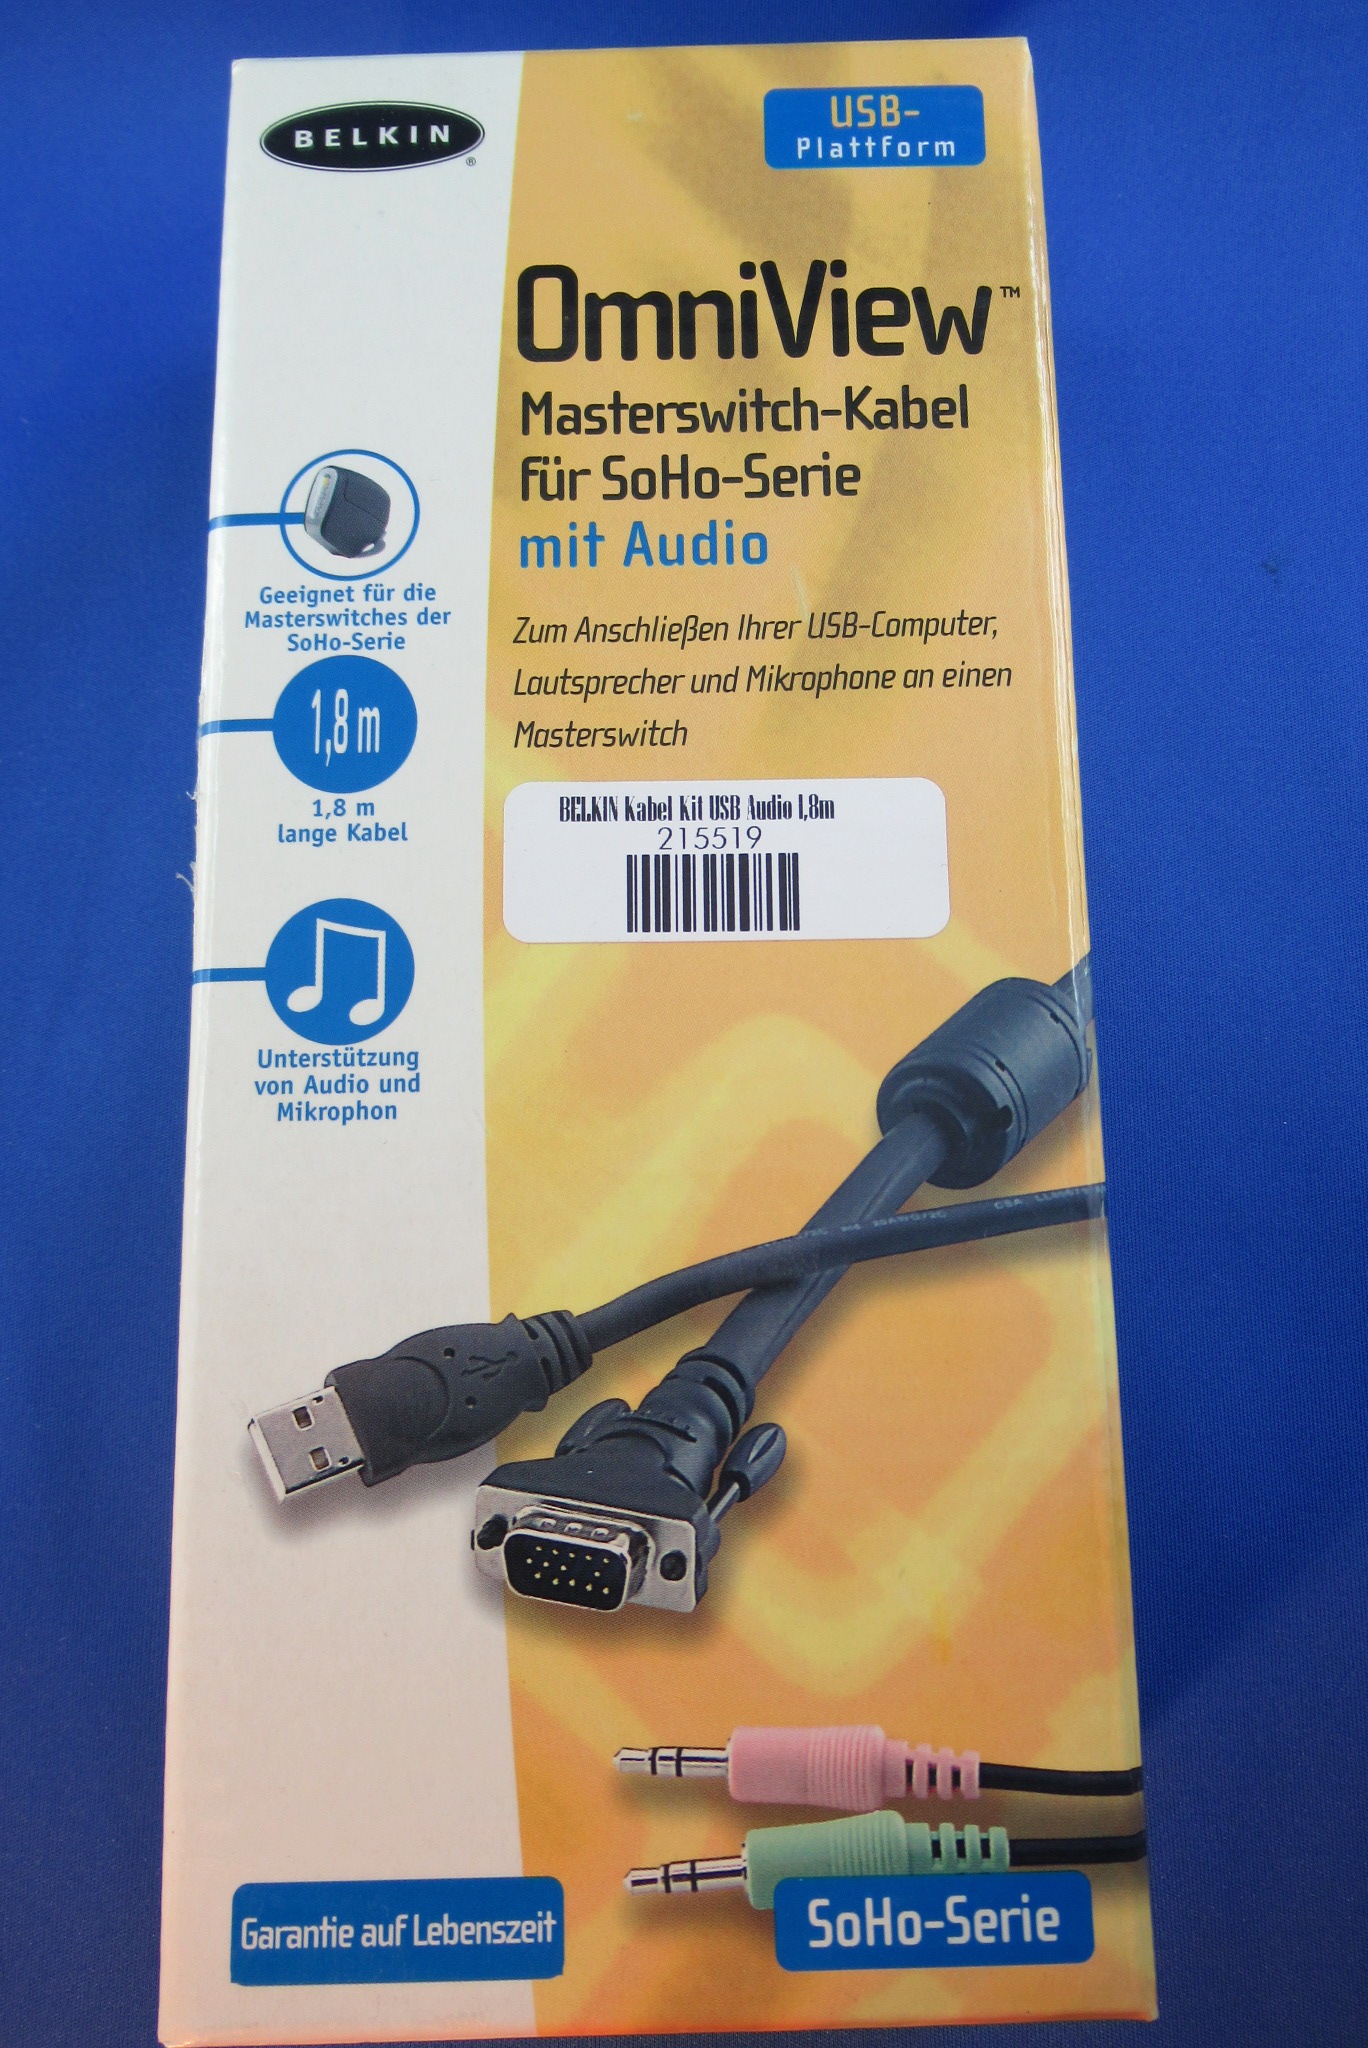 Kabel-Kit USB Audio 1,8m BELKIN F1D9101G06